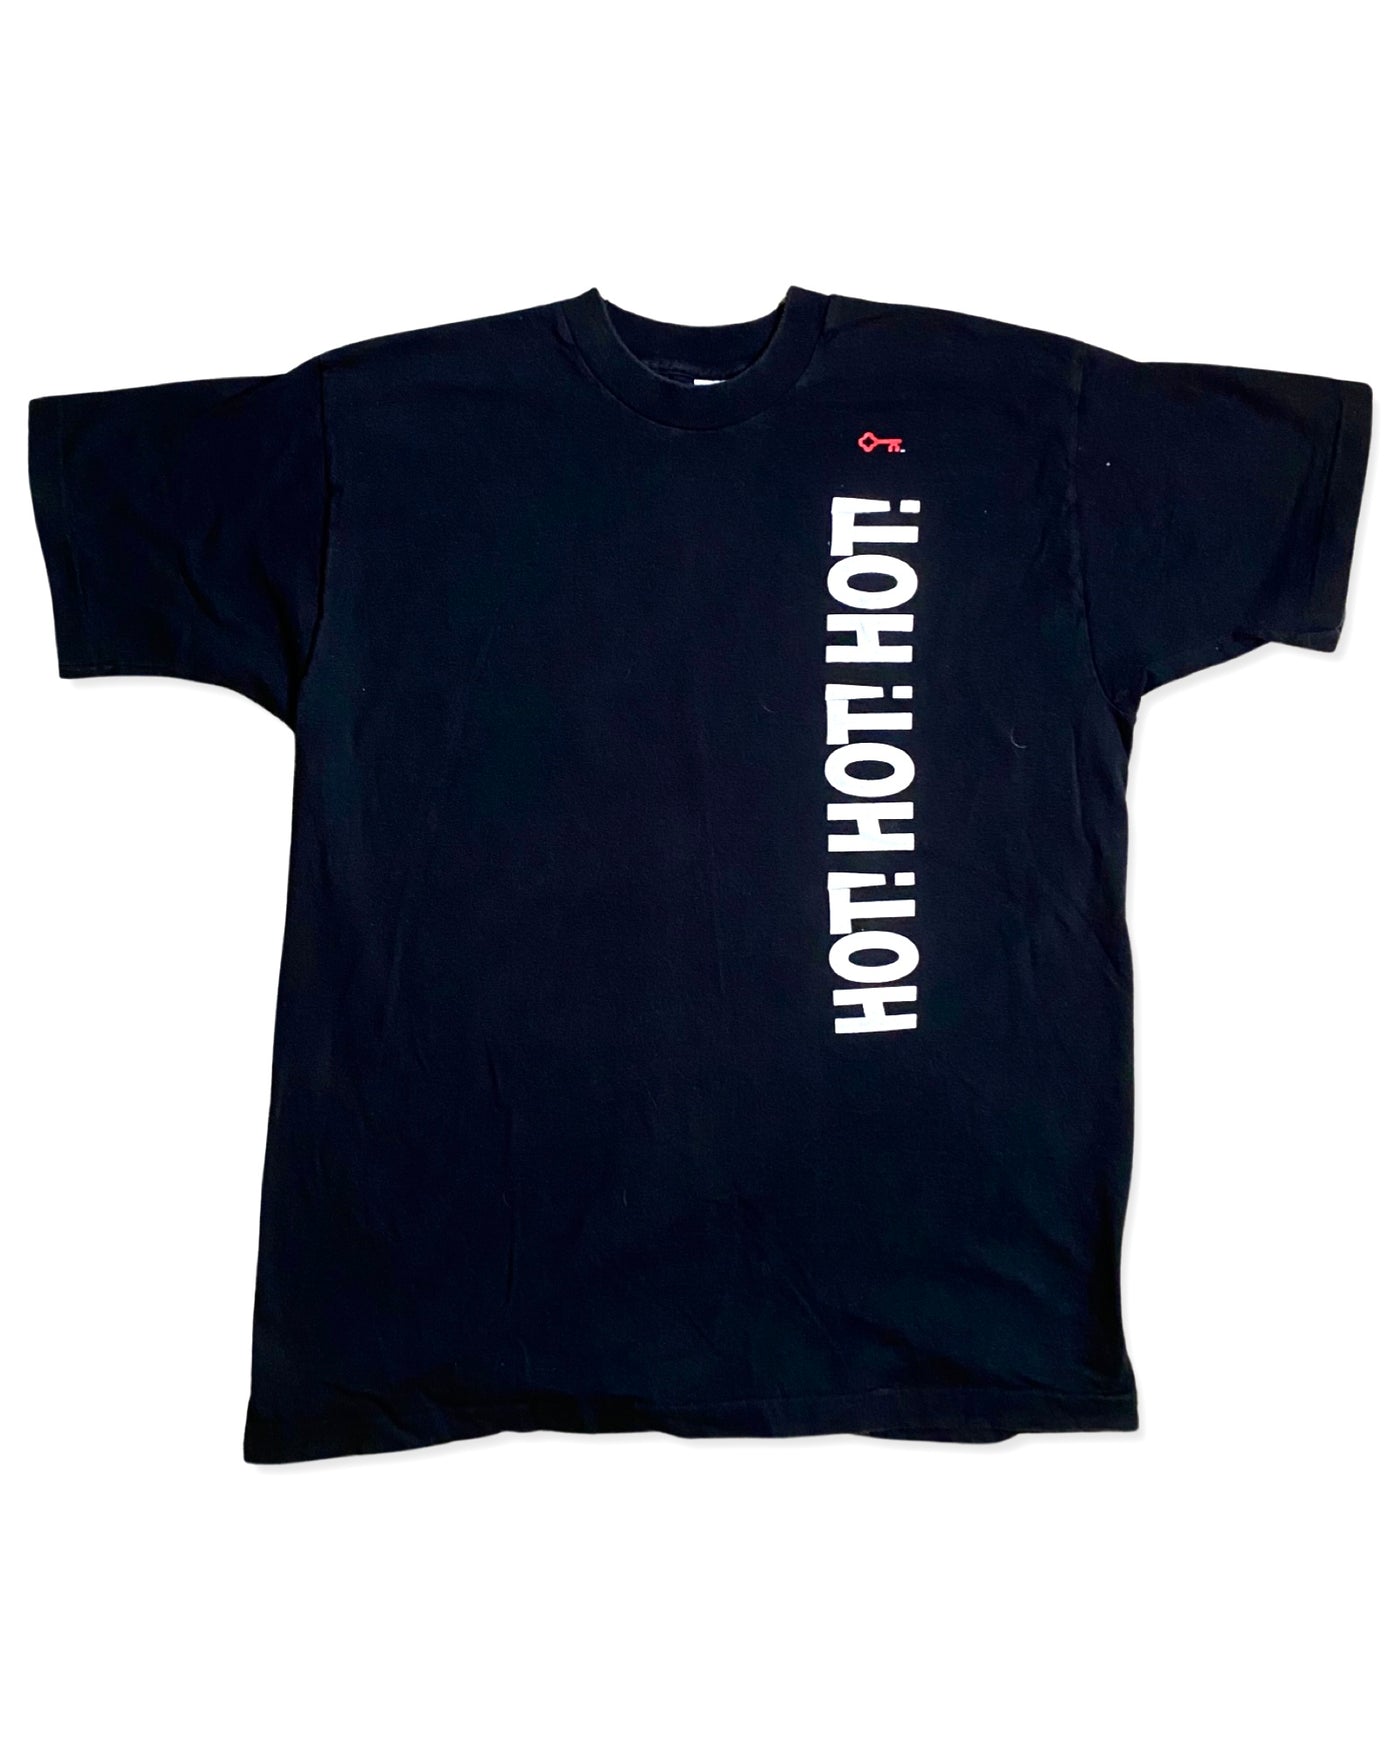 Vintage 90s Key Bank Promo T-Shirt